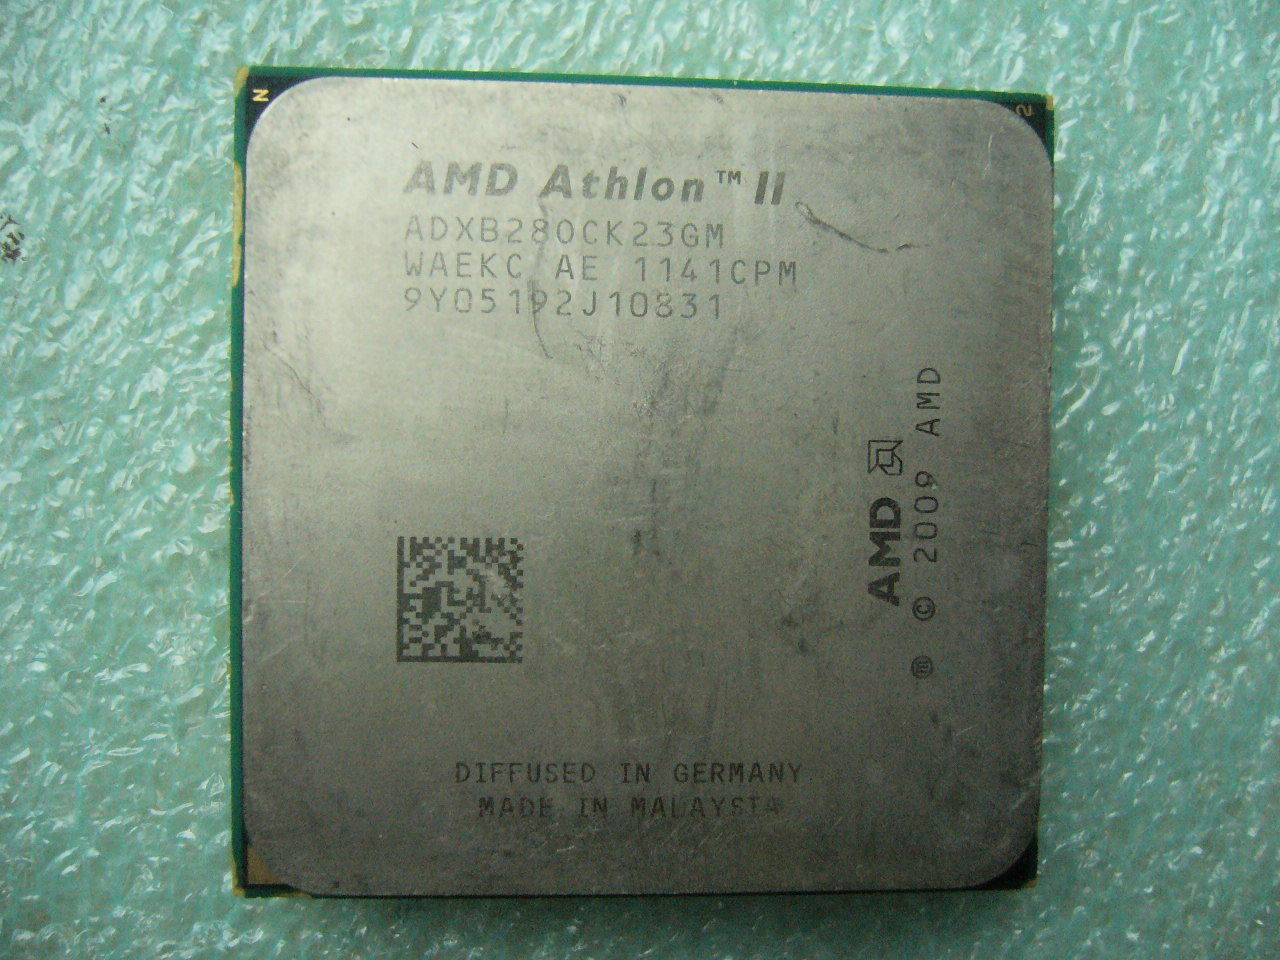 QTY 1x AMD Athlon II B28 3.4 GHz Dual-Core (ADXB28OCK23GM) CPU Socket AM3